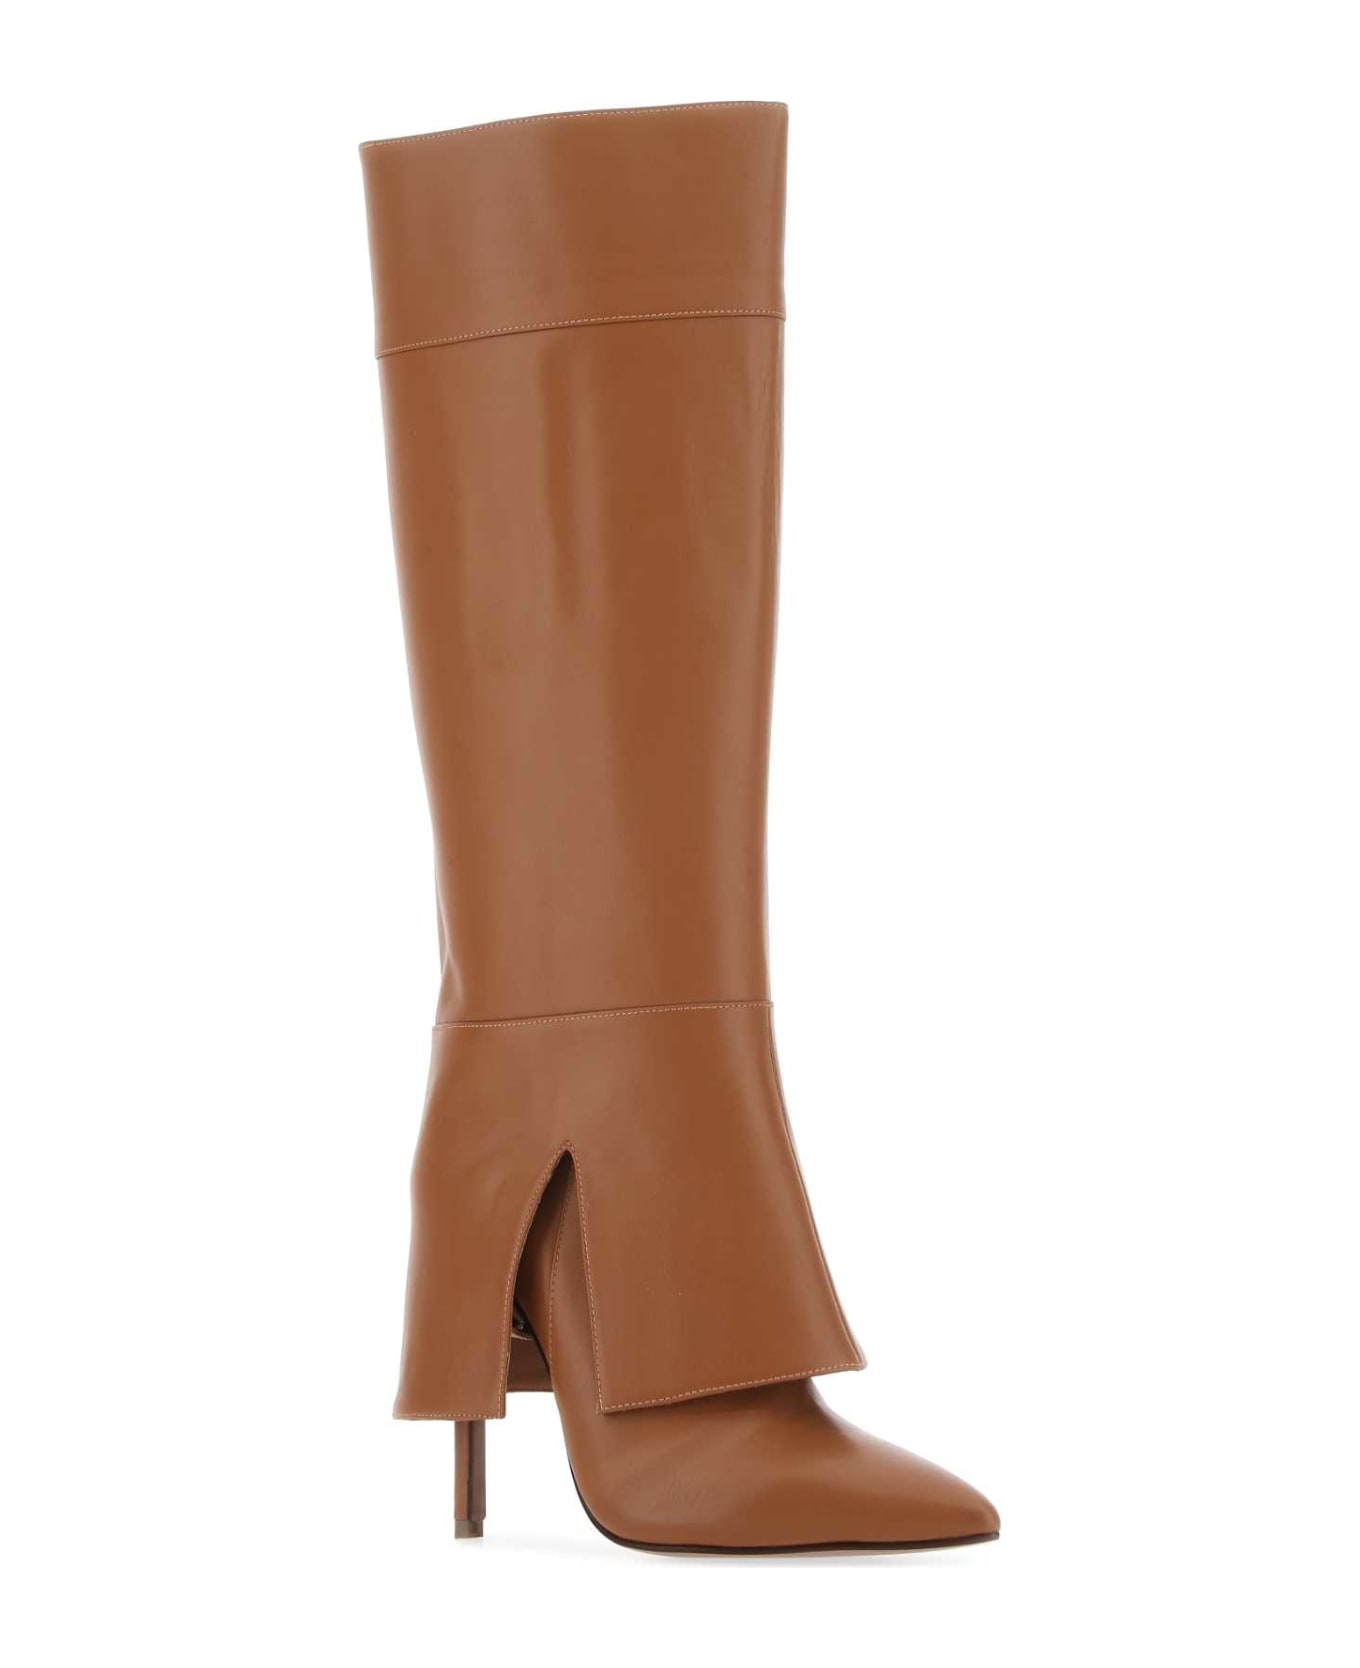 Andrea Wazen Brown Leather Boots - HAZLNUT ブーツ